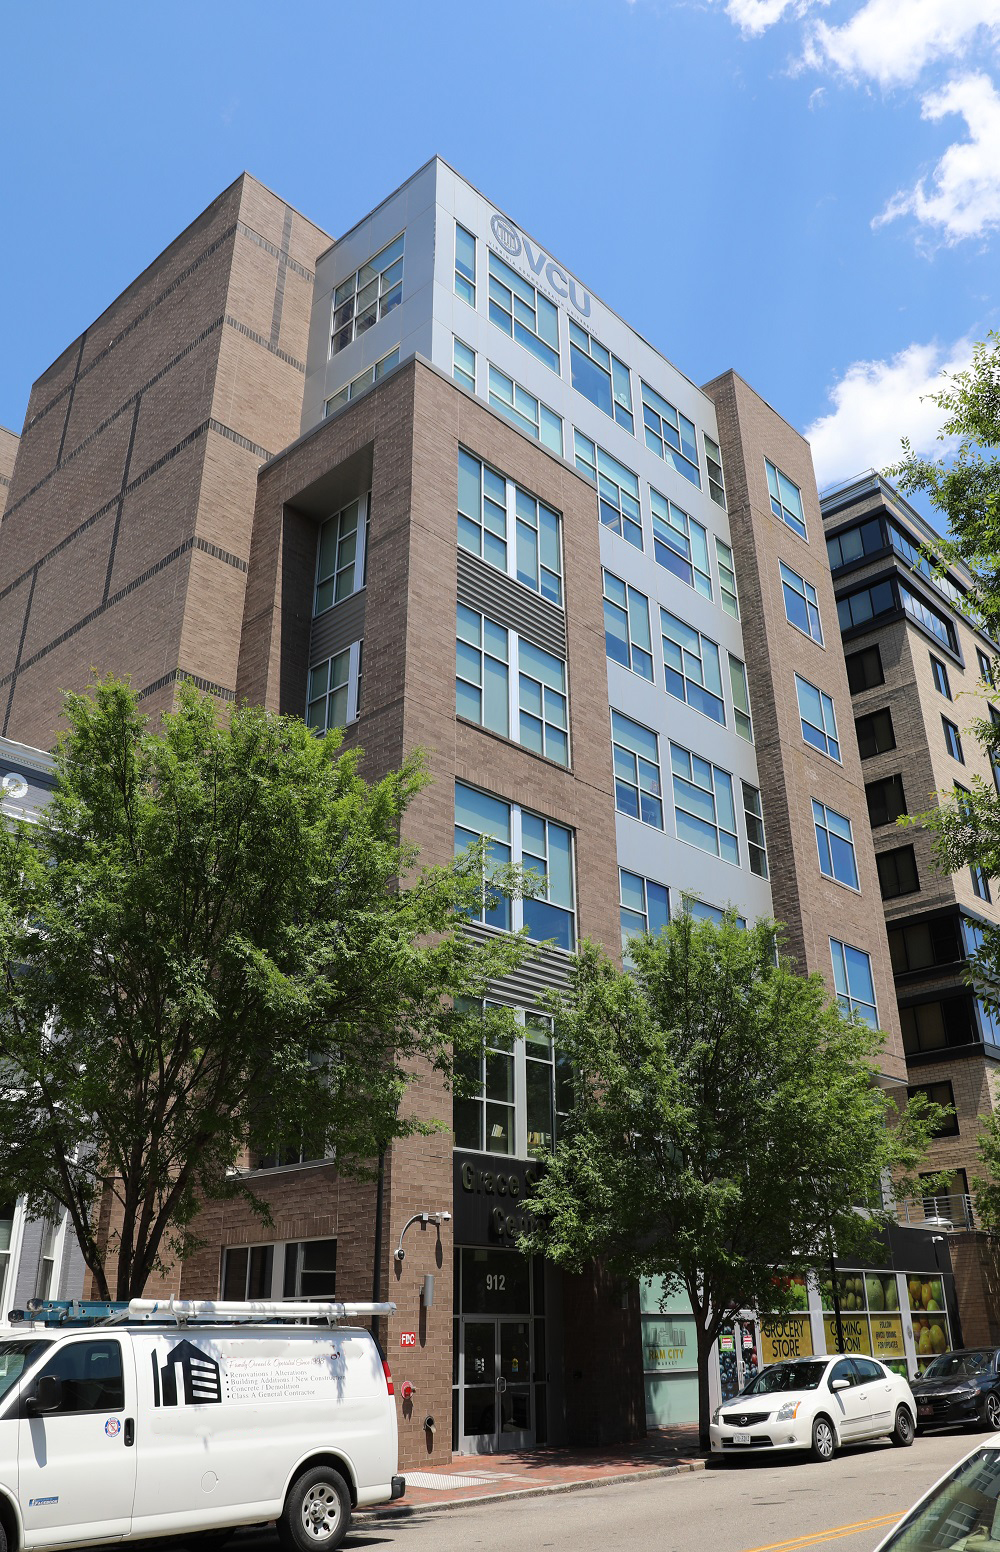 Image showing 912 West Grace Street building